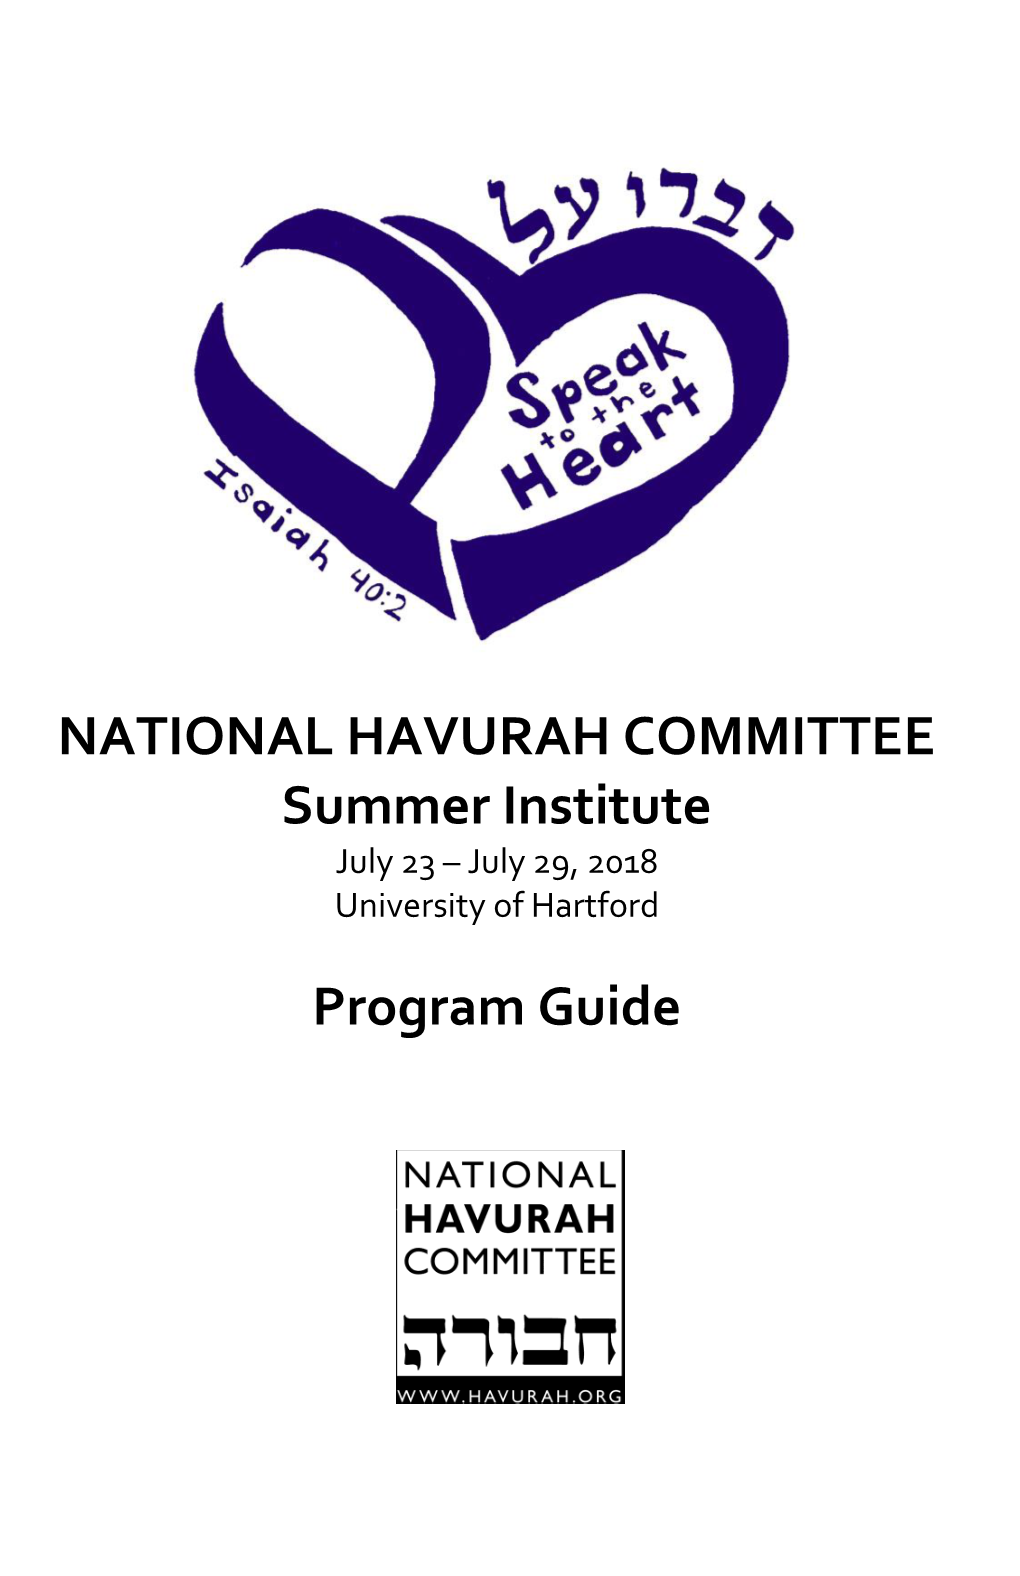 NATIONAL HAVURAH COMMITTEE Summer Institute Program Guide